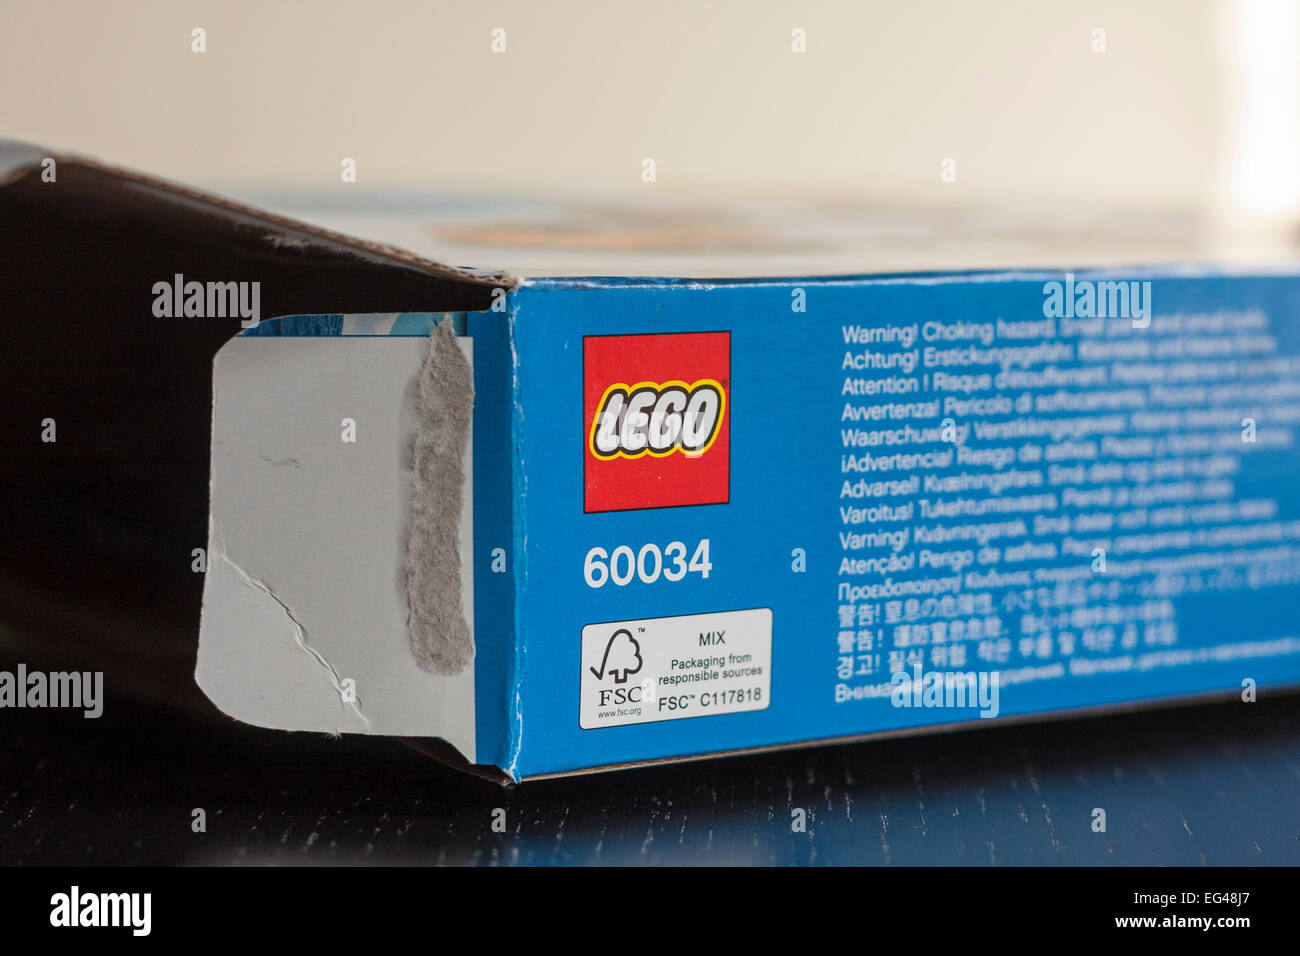 Offene Ende einer Lego-Box zeigt das berühmte Lego-logo Stockfoto